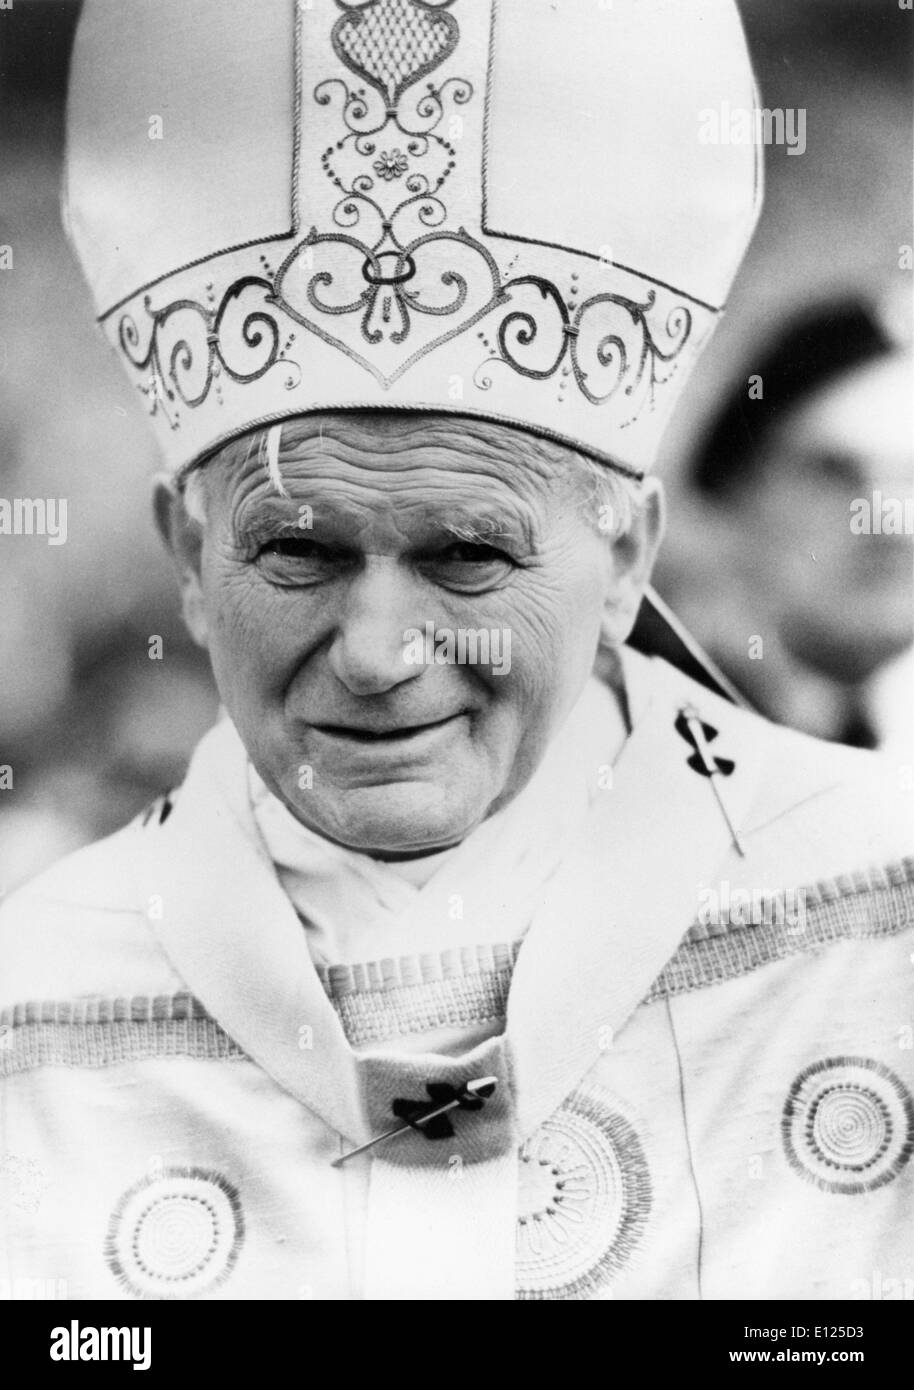 Papst Johannes Paul II aka Karol Wojtyla, arrivando all'aeroporto di Orly, Parigi. Foto Stock